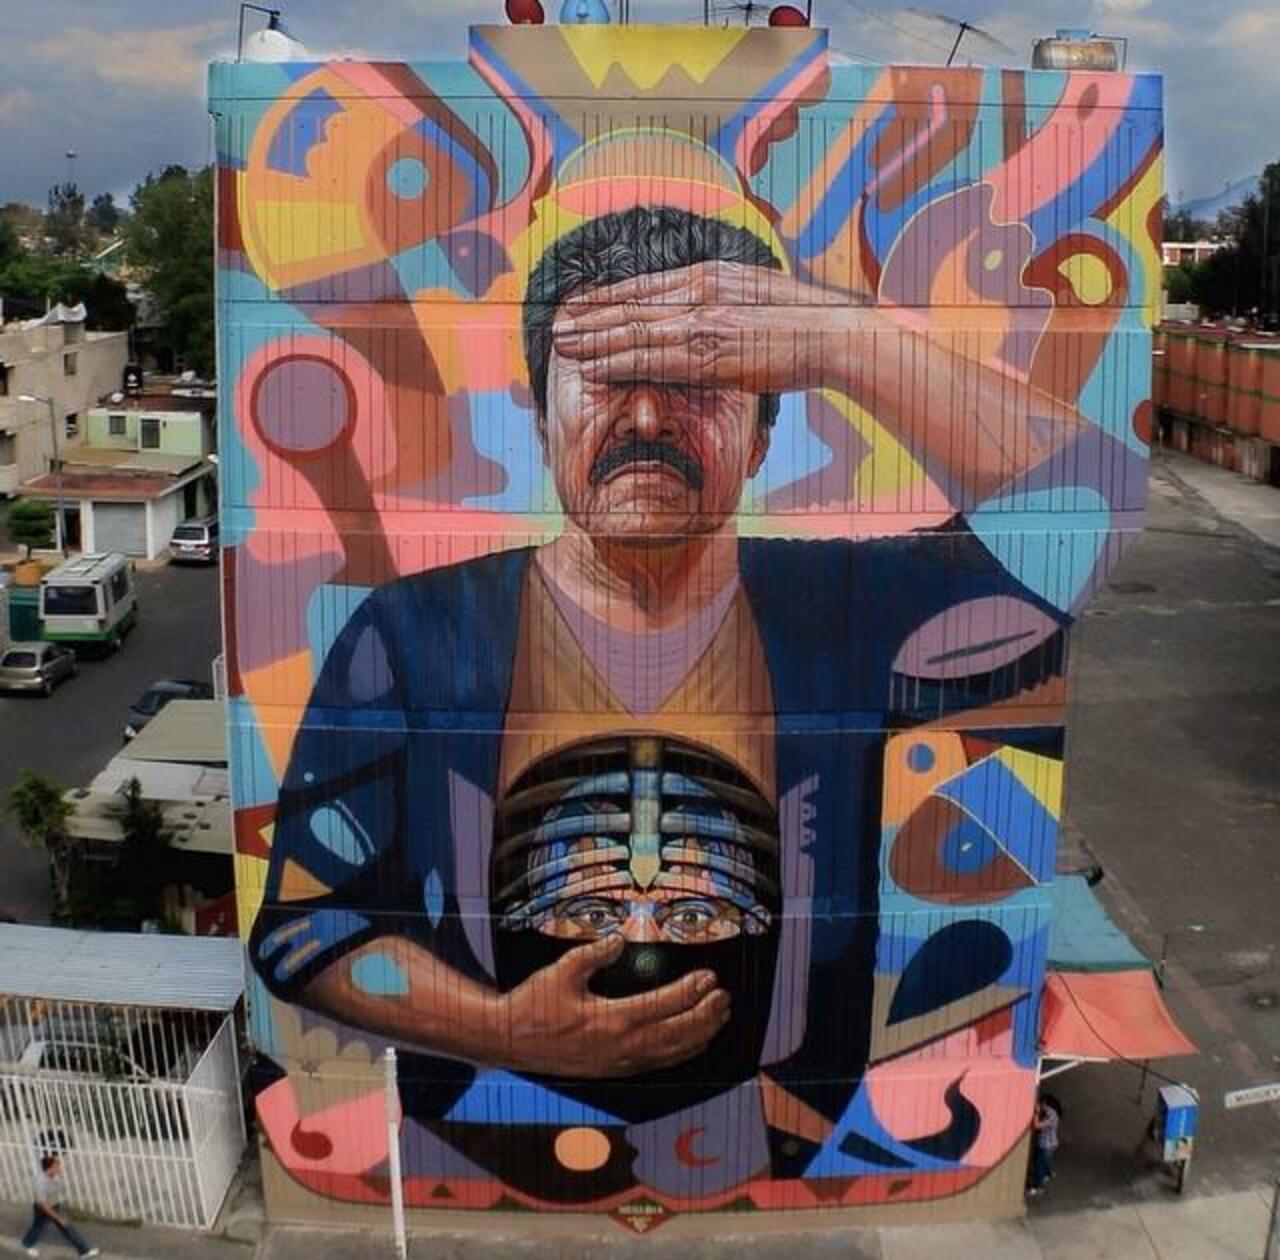 Large scale Street Art by the artist Daniel Cortez 

#art #mural #graffiti #streetart http://t.co/rwx3WdqGRh